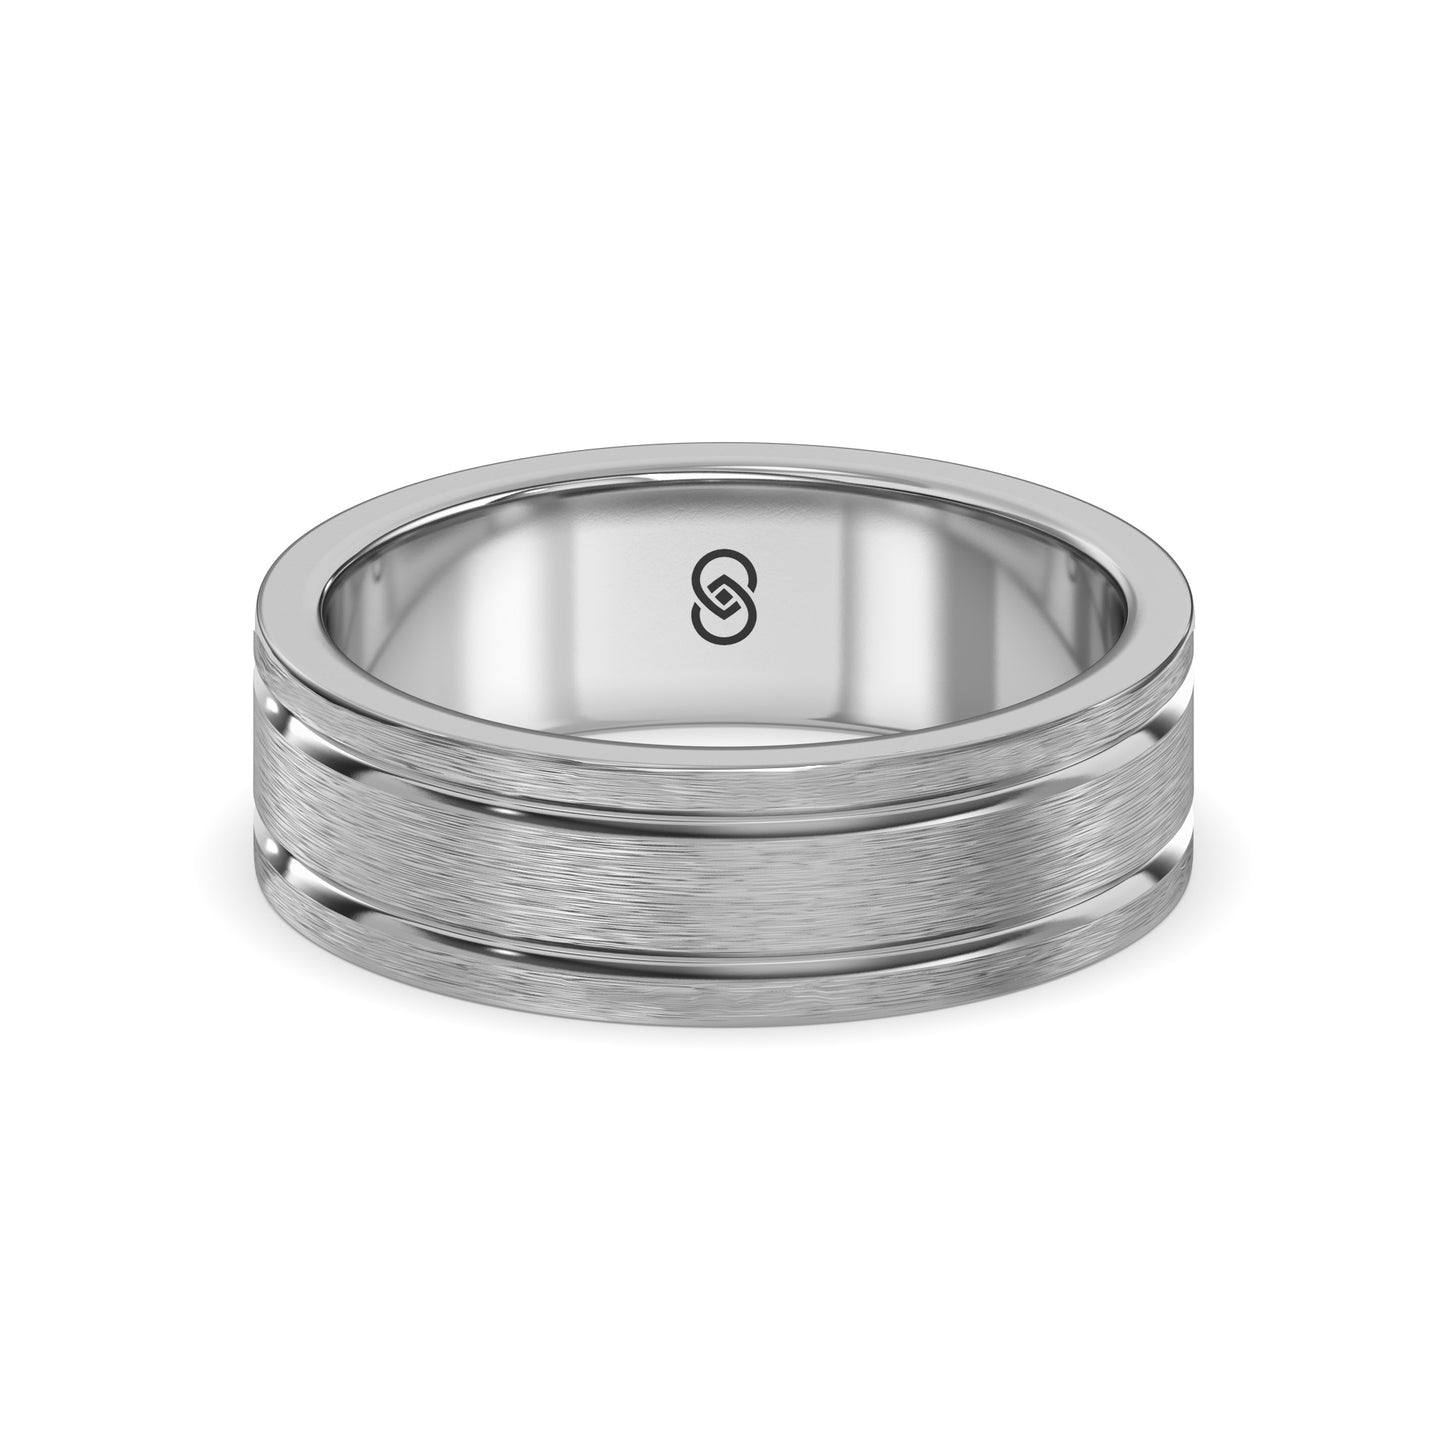 7MM Forte Brushed Mens Wedding Ring